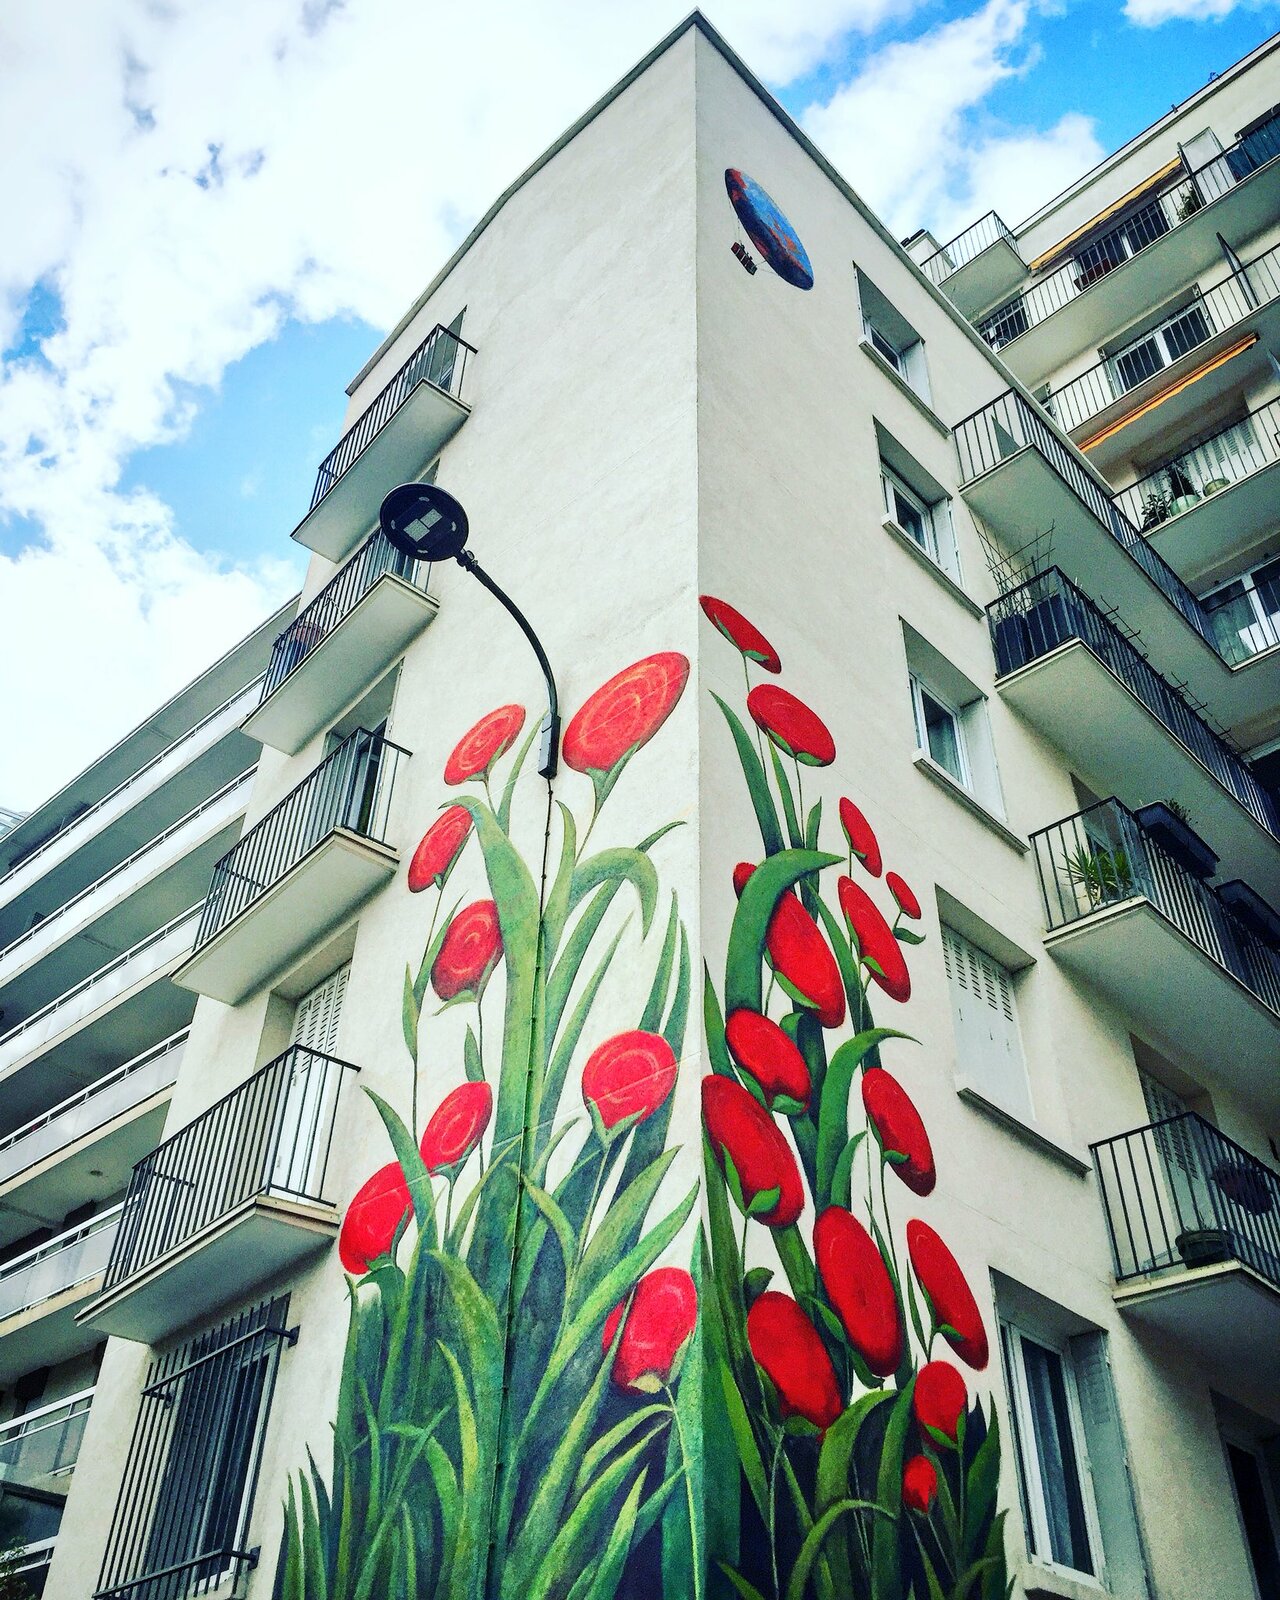 « Flowers » by #mercedesuribe #streetart #graffiti #spray #bombing #wall #sprayart #urbanart #graffitiart #streetphoto #urbanwalls #nirindastreet https://t.co/Ex0Q4gi88H